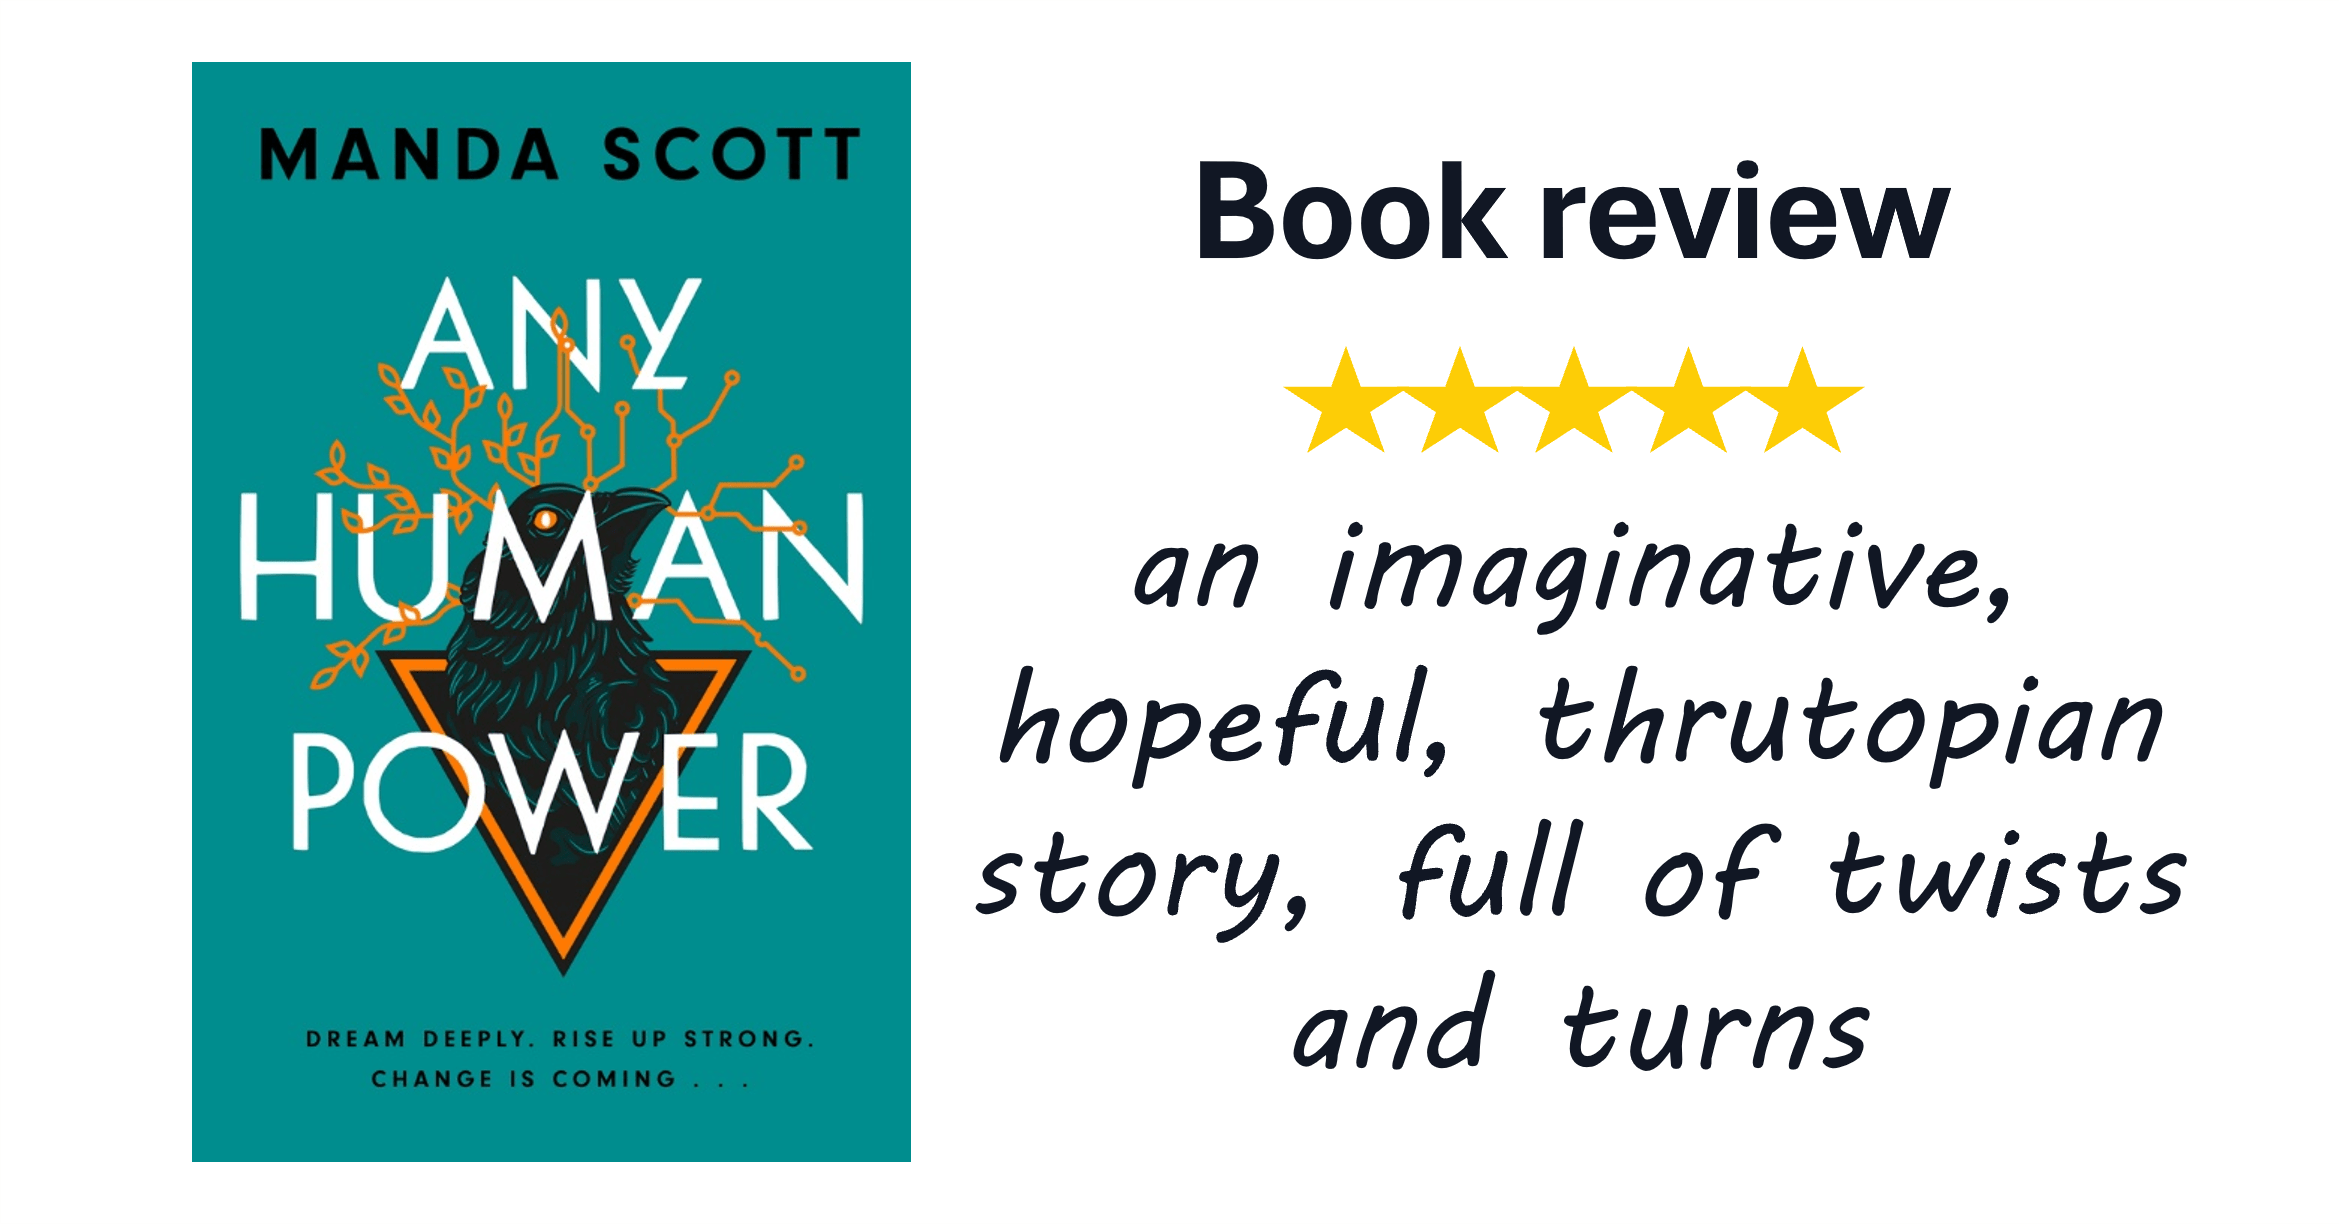 Book review – Any Human Power by Manda Scott